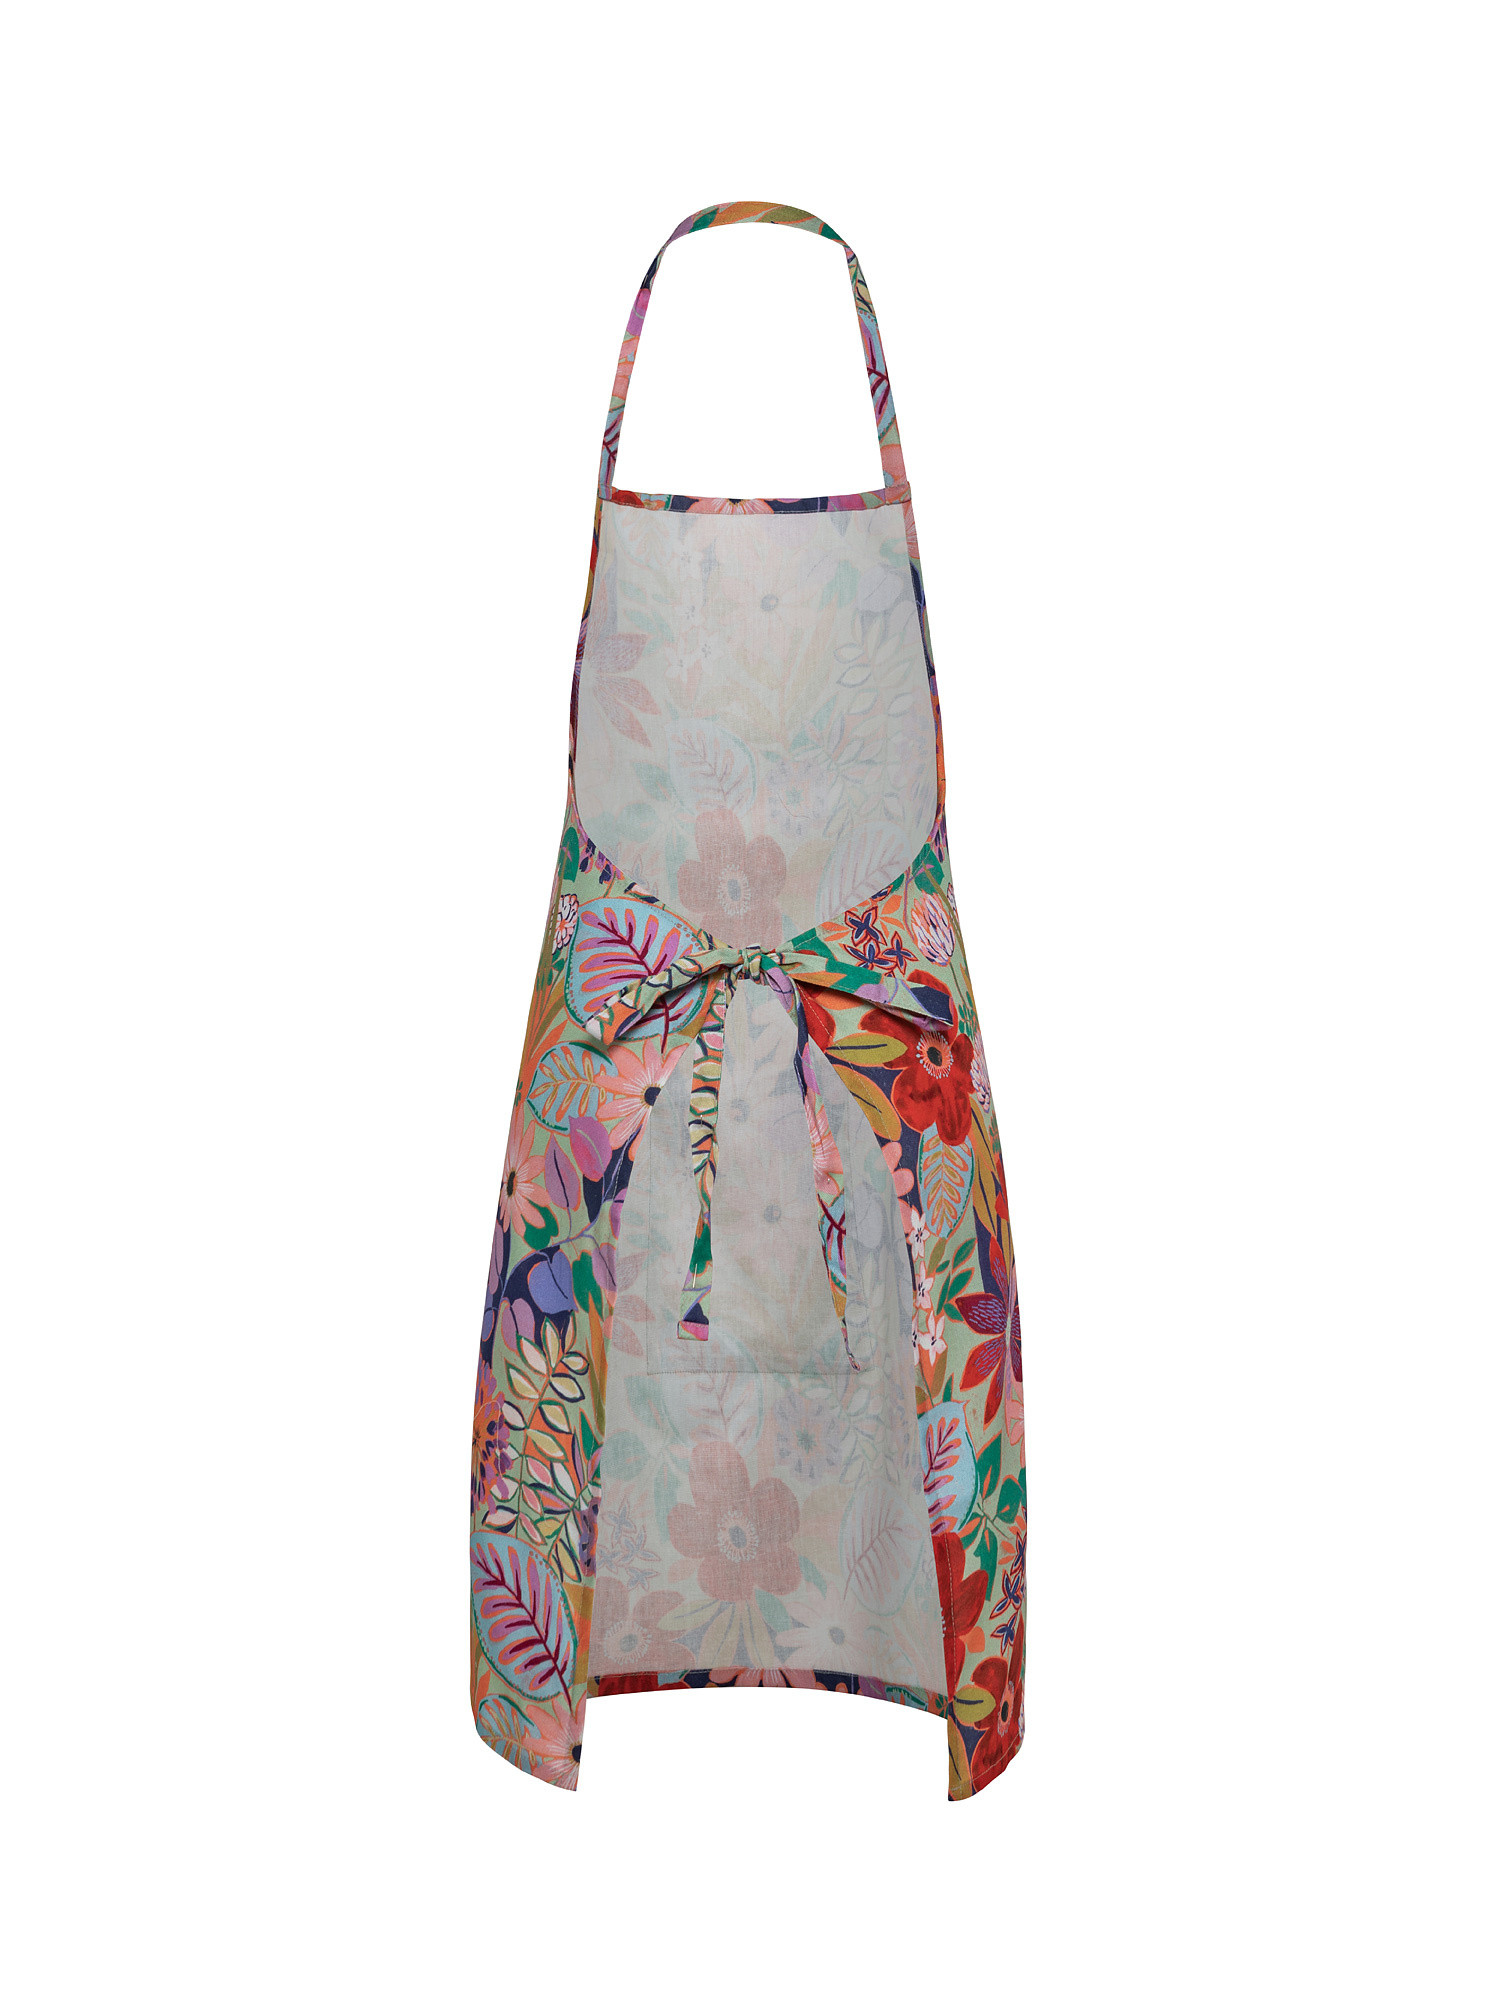 Grembiule da cucina panama di cotone stampa floreale, Multicolor, large image number 1